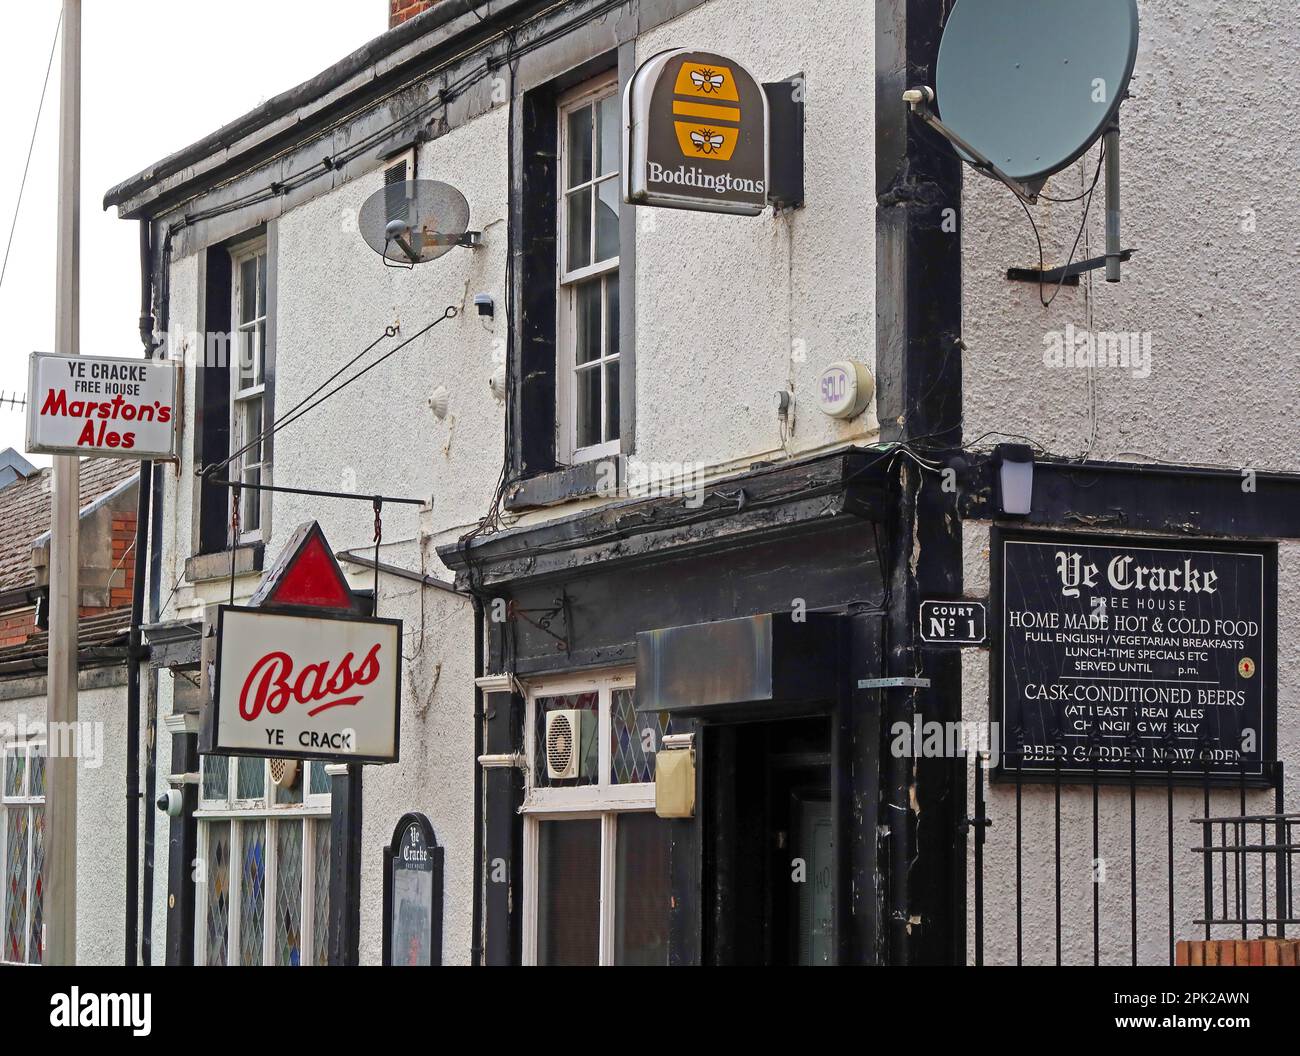 Ye Crack, historischer Liverpool Freehouse Pub, wo John Lennon trank, Bass, Boddingtons und Marstons Ales Schilder, 13 Rice Street, L1 9BB Stockfoto